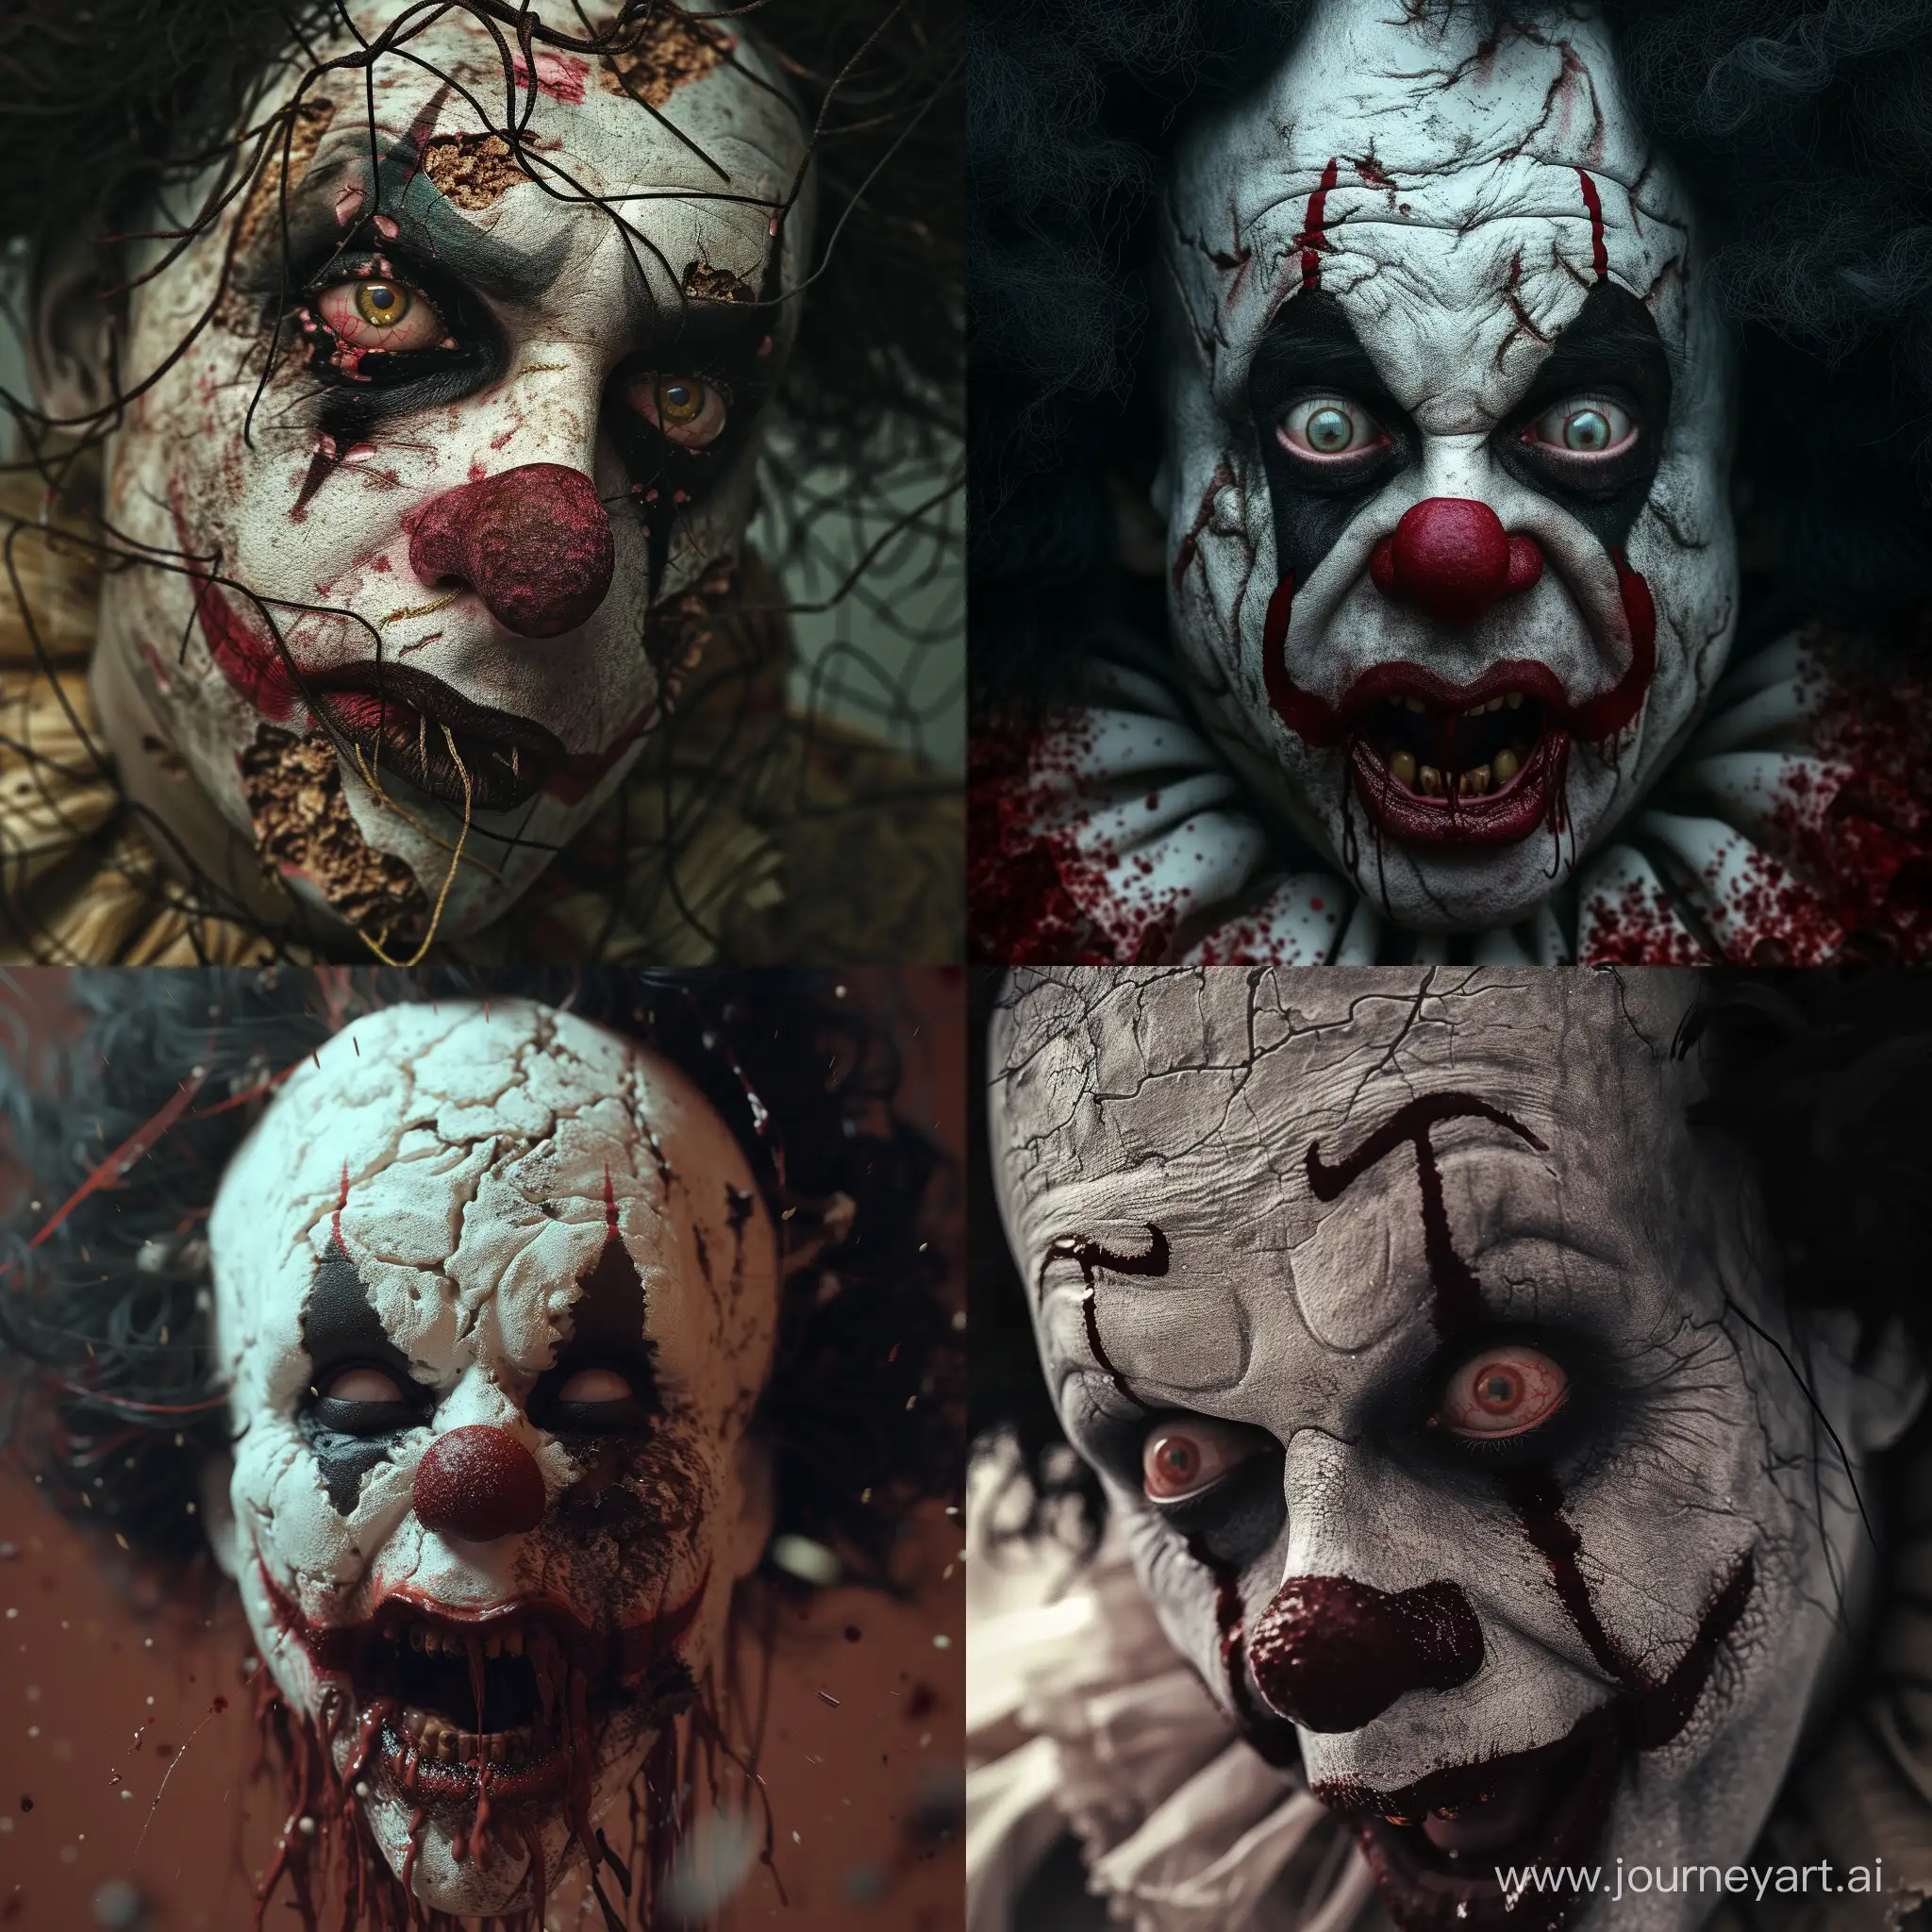 Psychedelic-Killer-Clown-with-Mouth-Sewn-Shut-Glitch-Art-Horror-Portrait